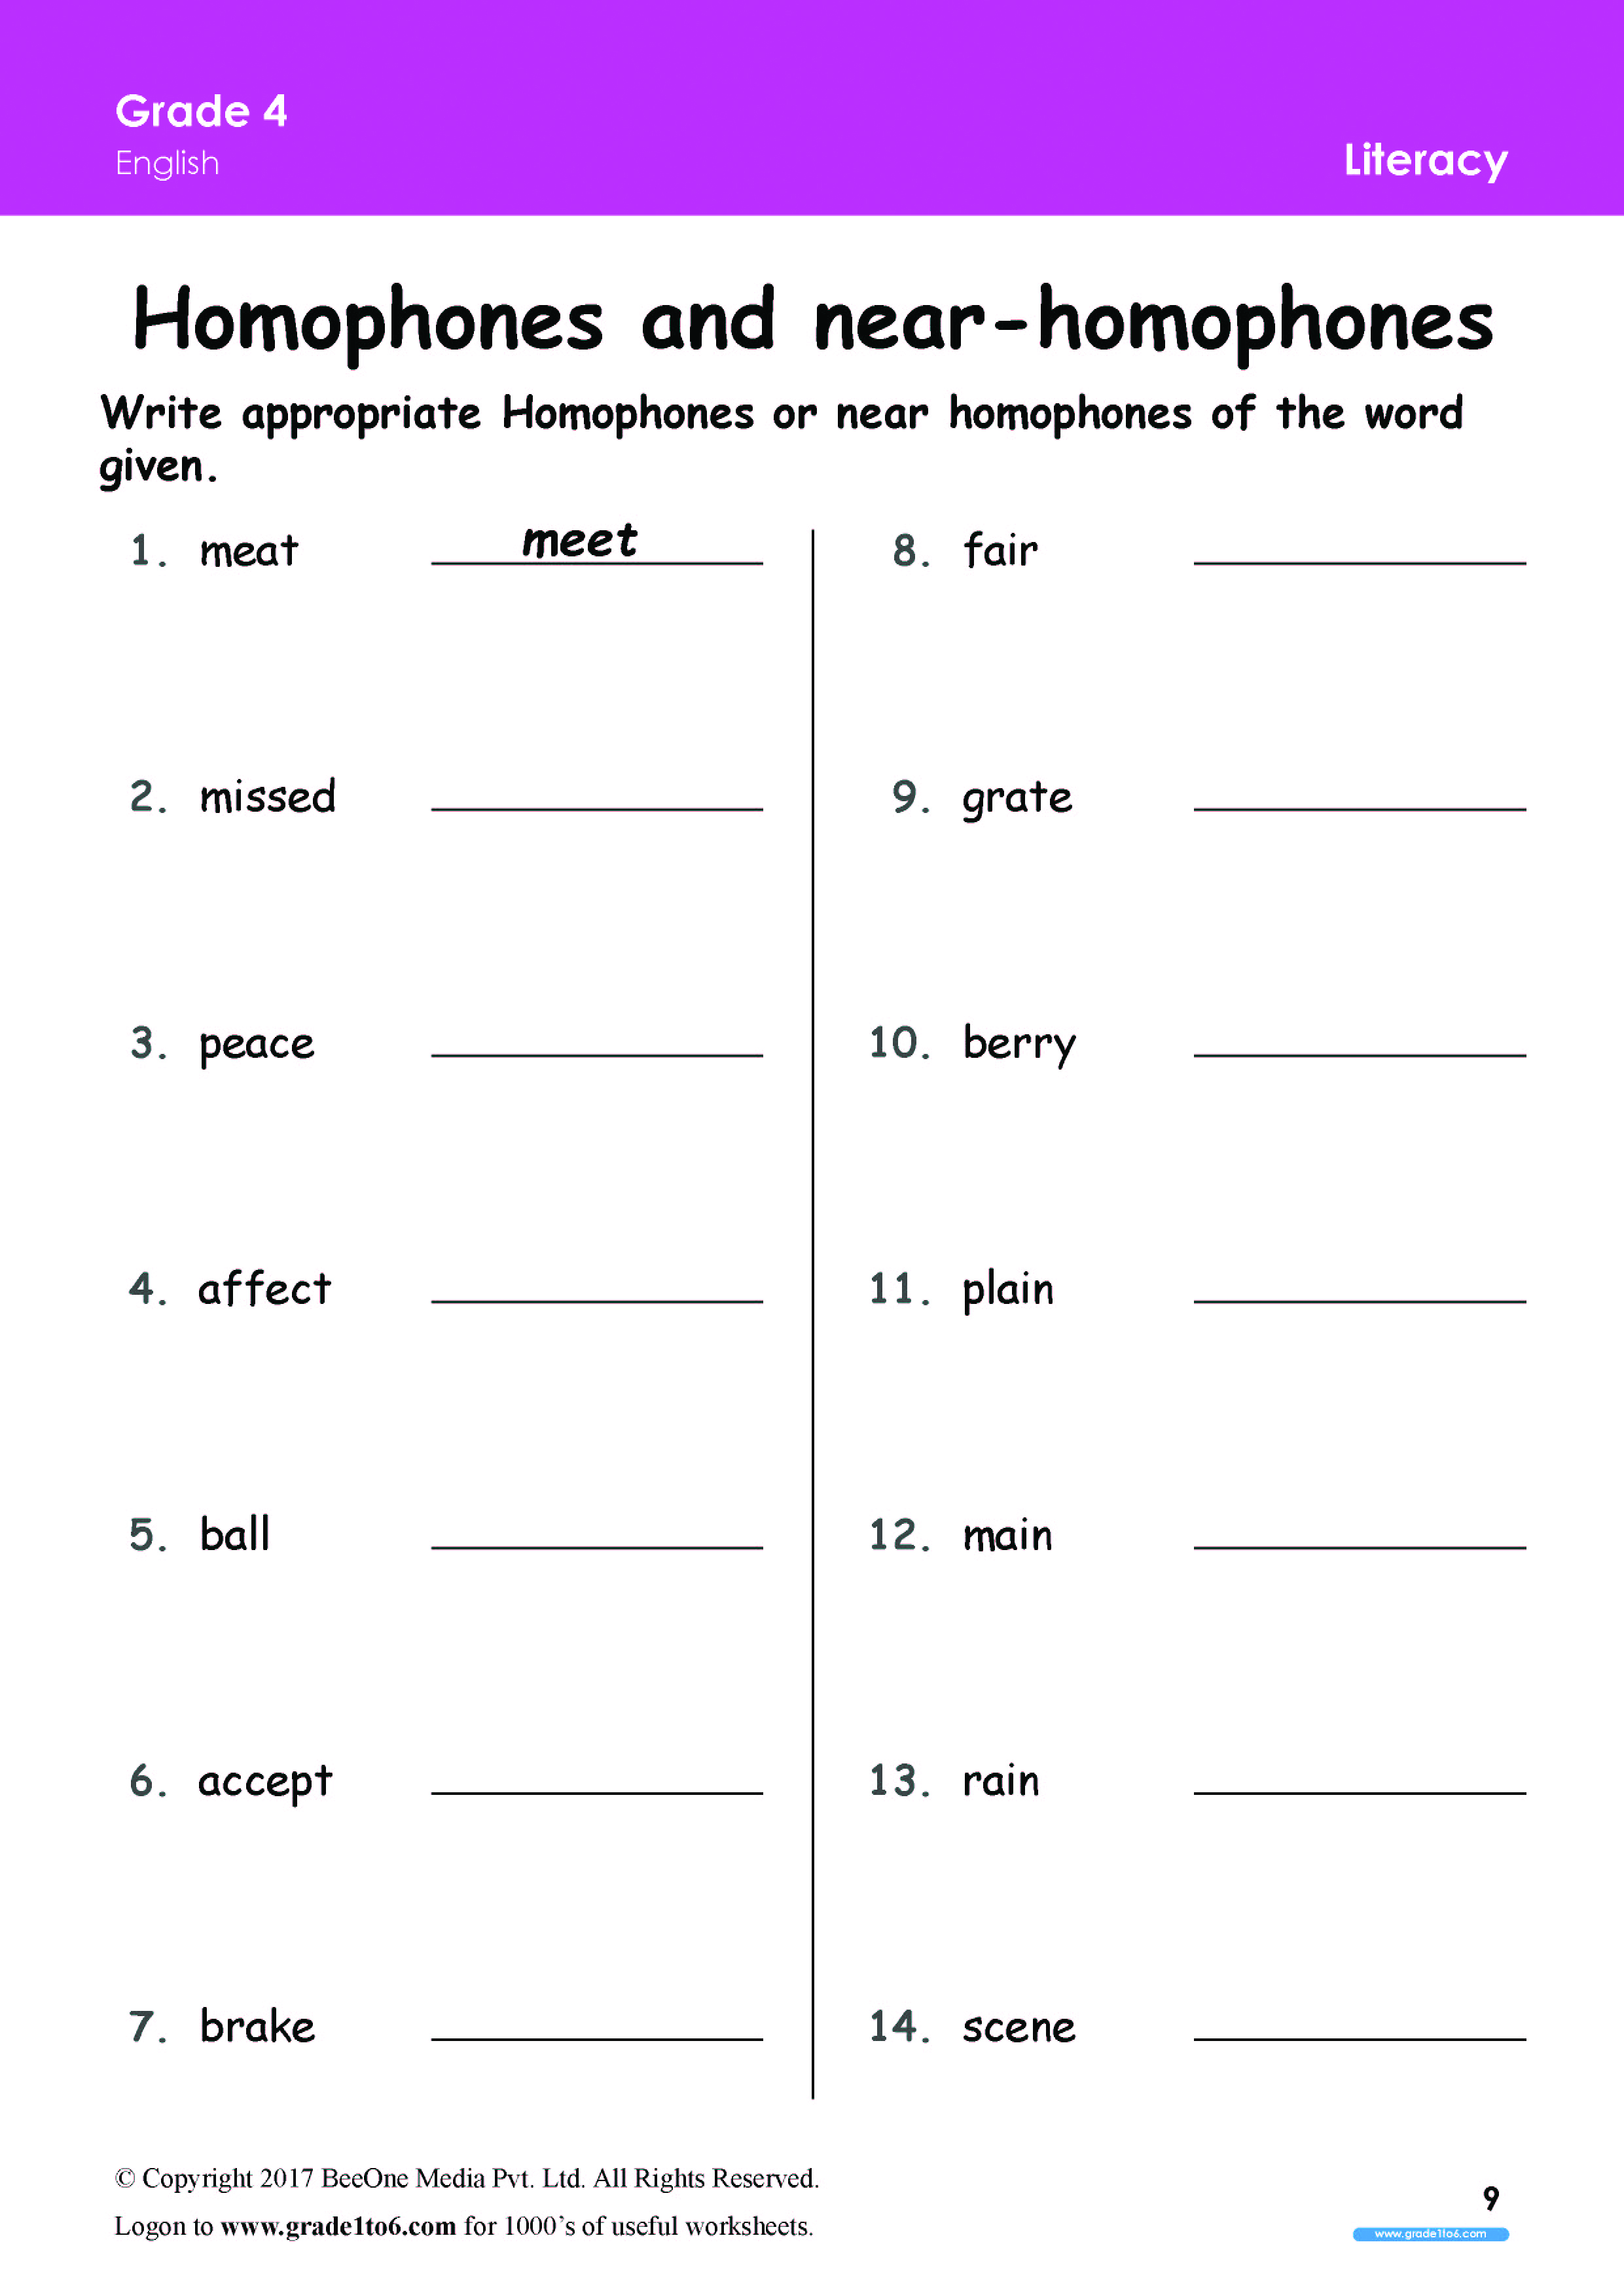 homophones worksheets grade 4 www grade1to6 com